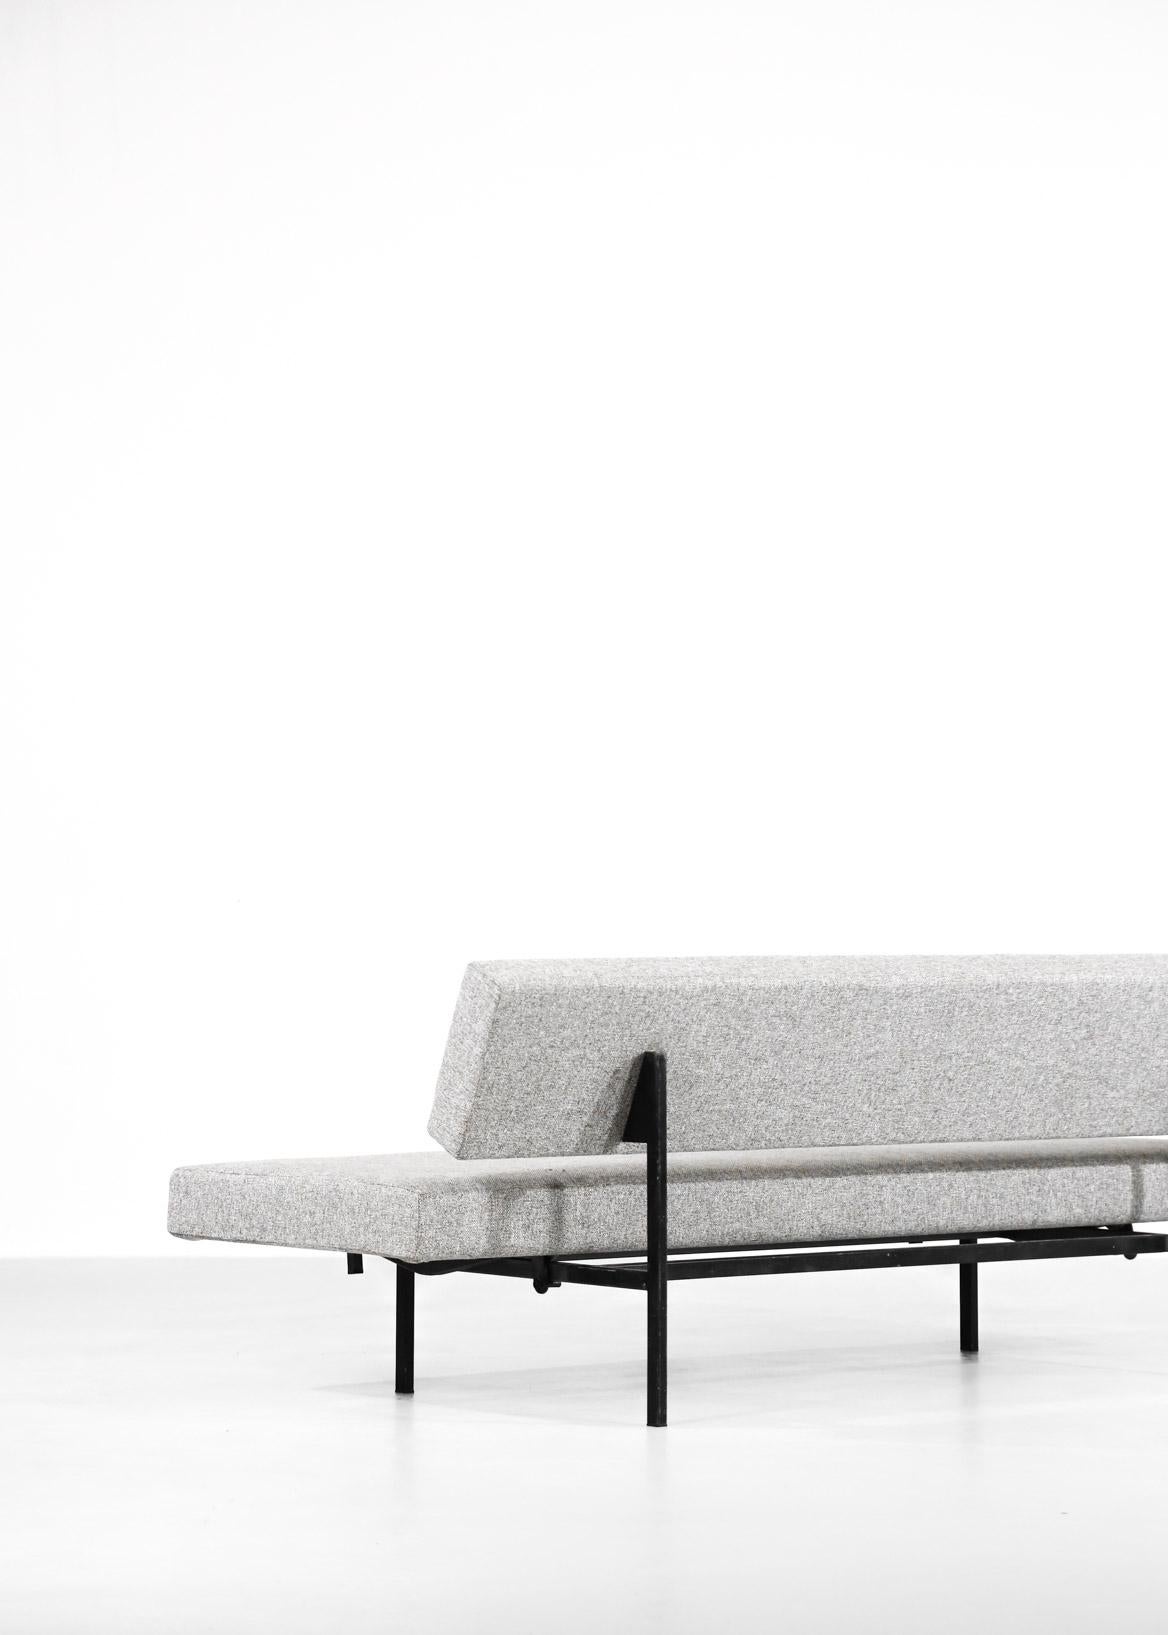 Metal Martin Visser Sofa or Sleeper Sofa for 't Spectrum, Netherlands For Sale